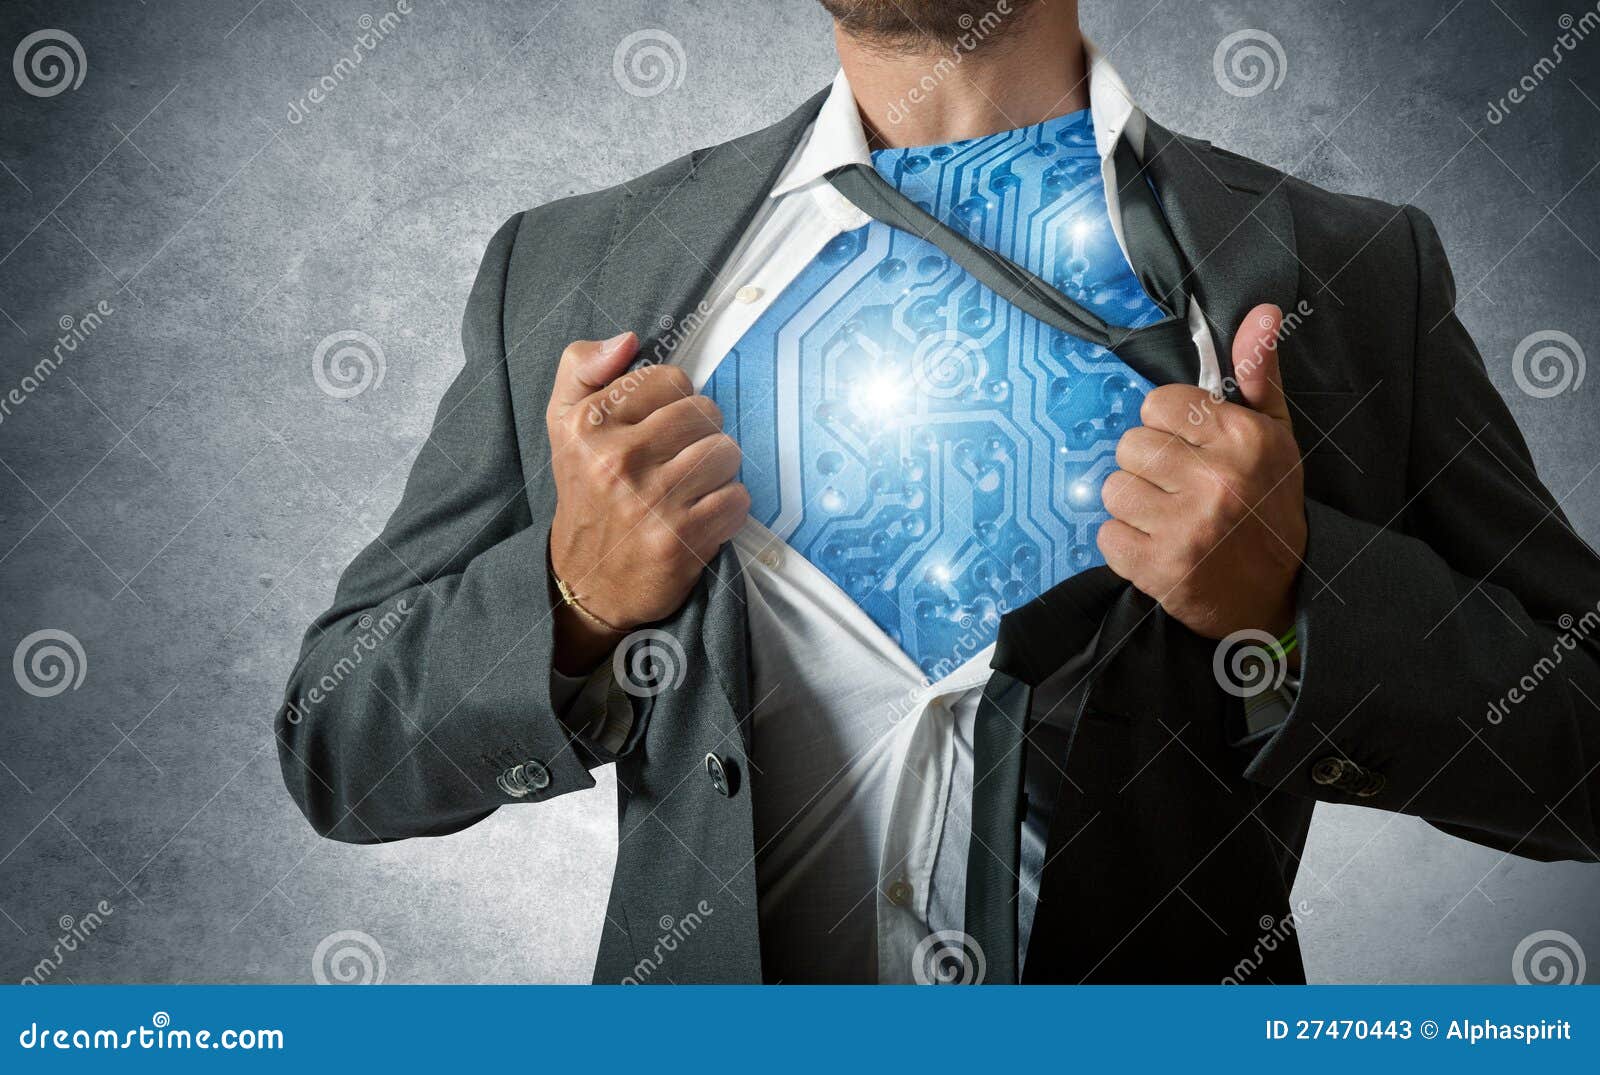 technology super hero